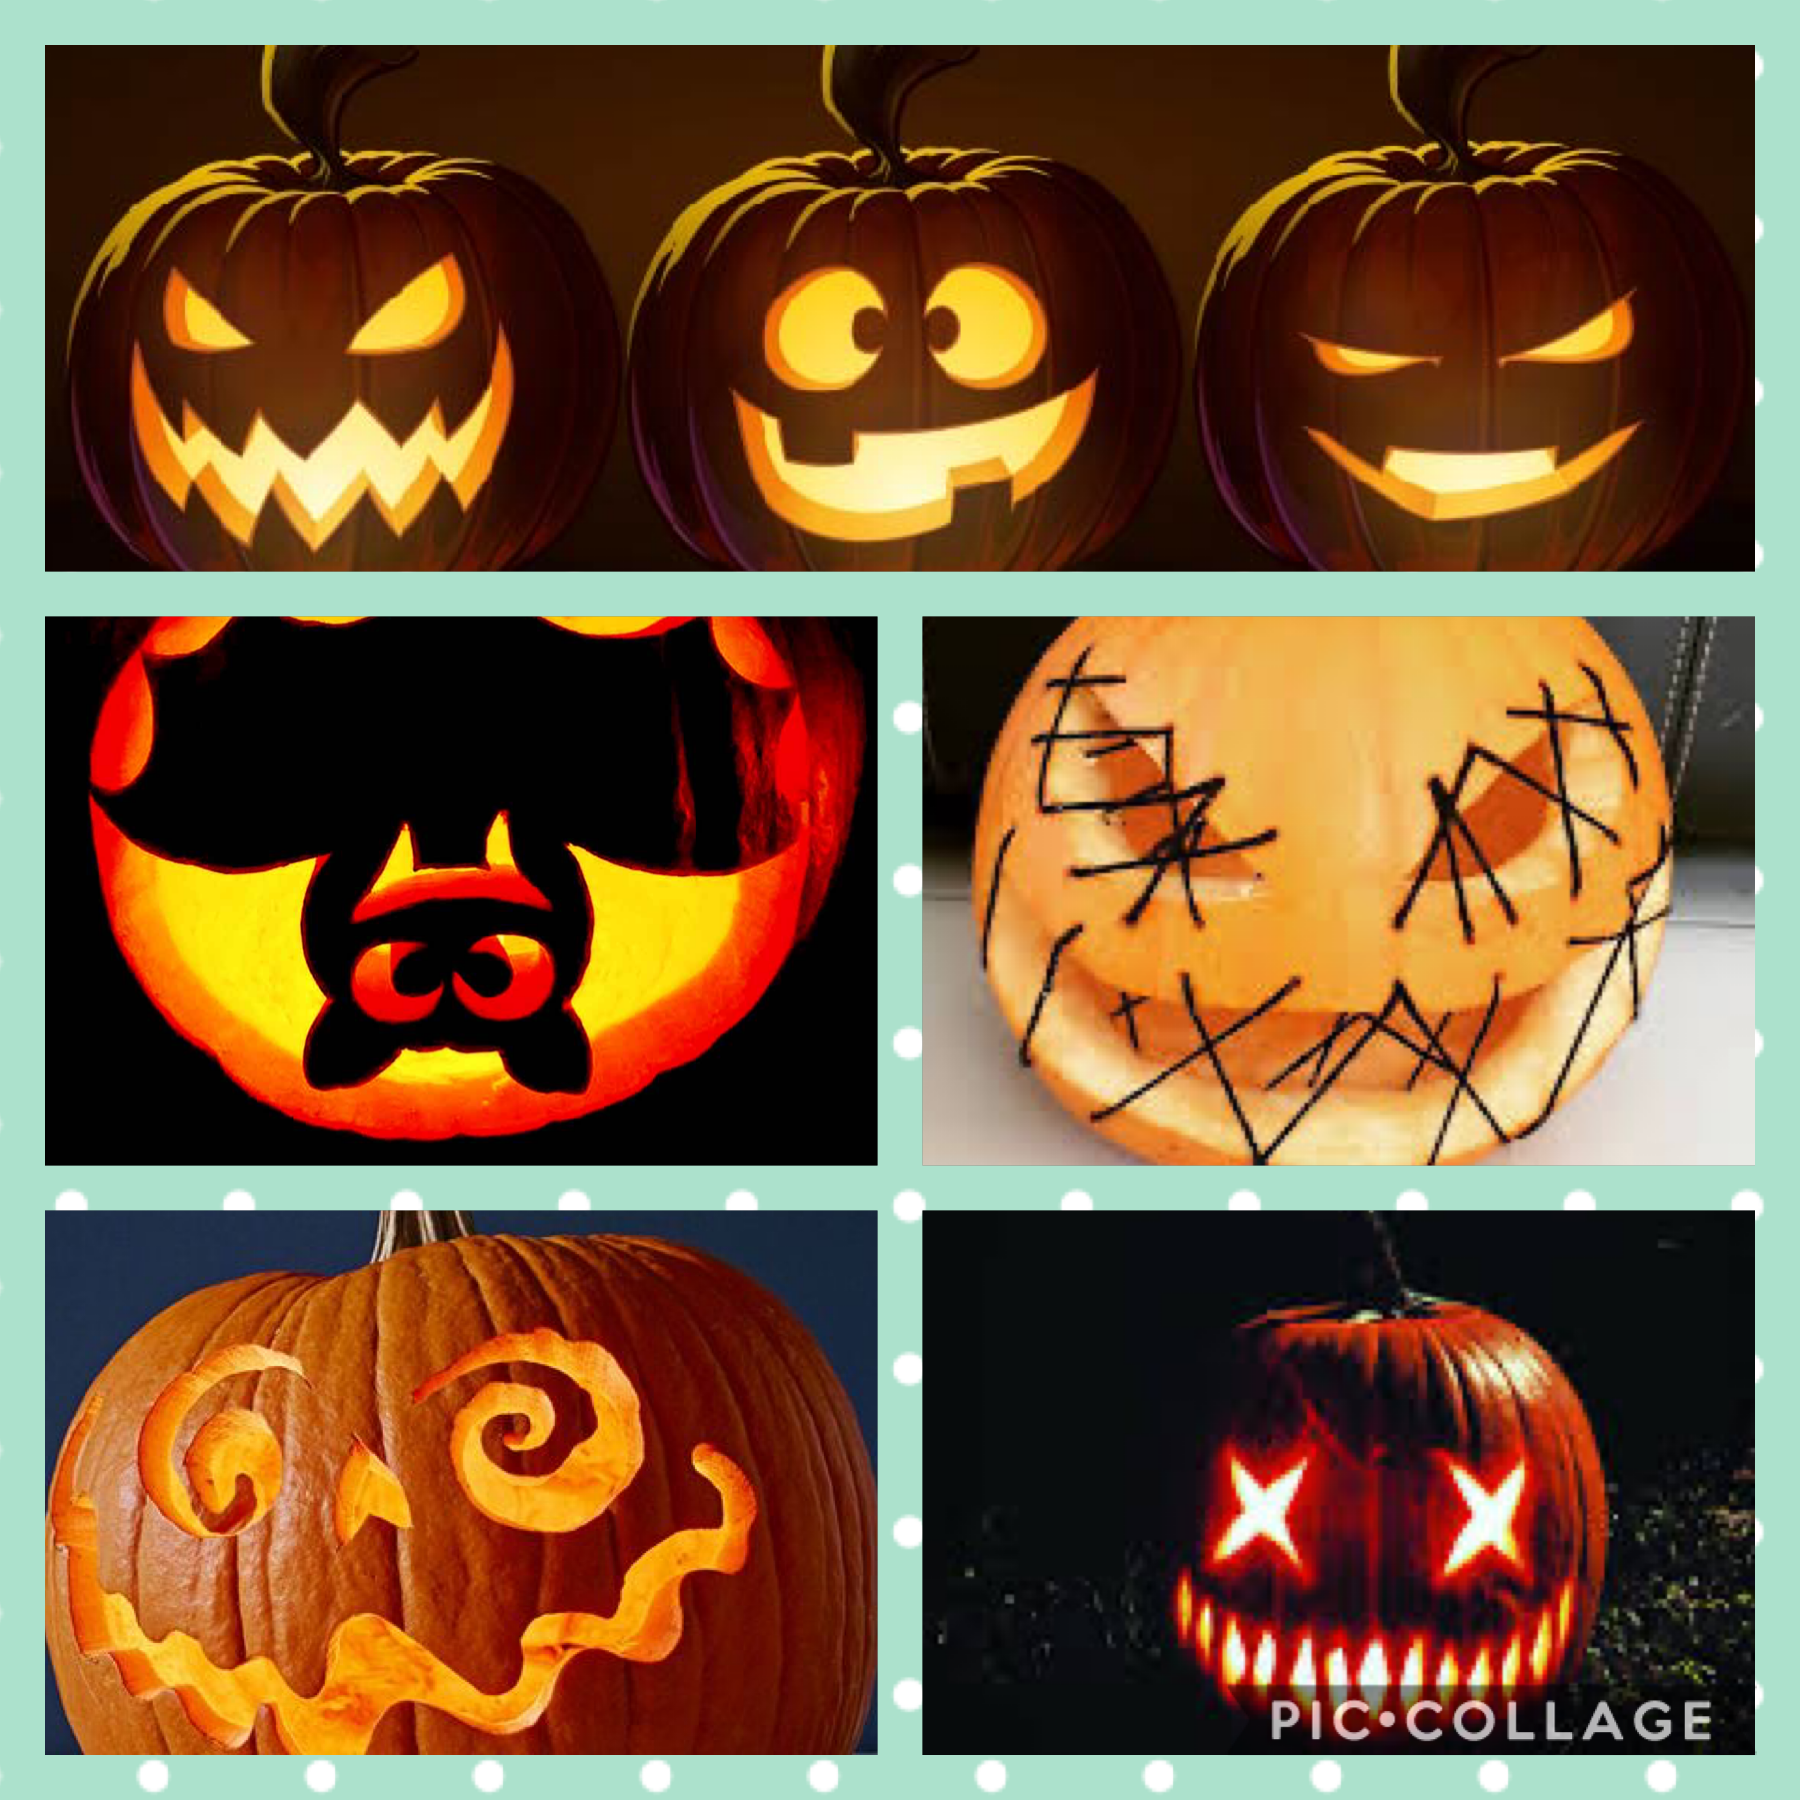 Pumpkin carving ideas 